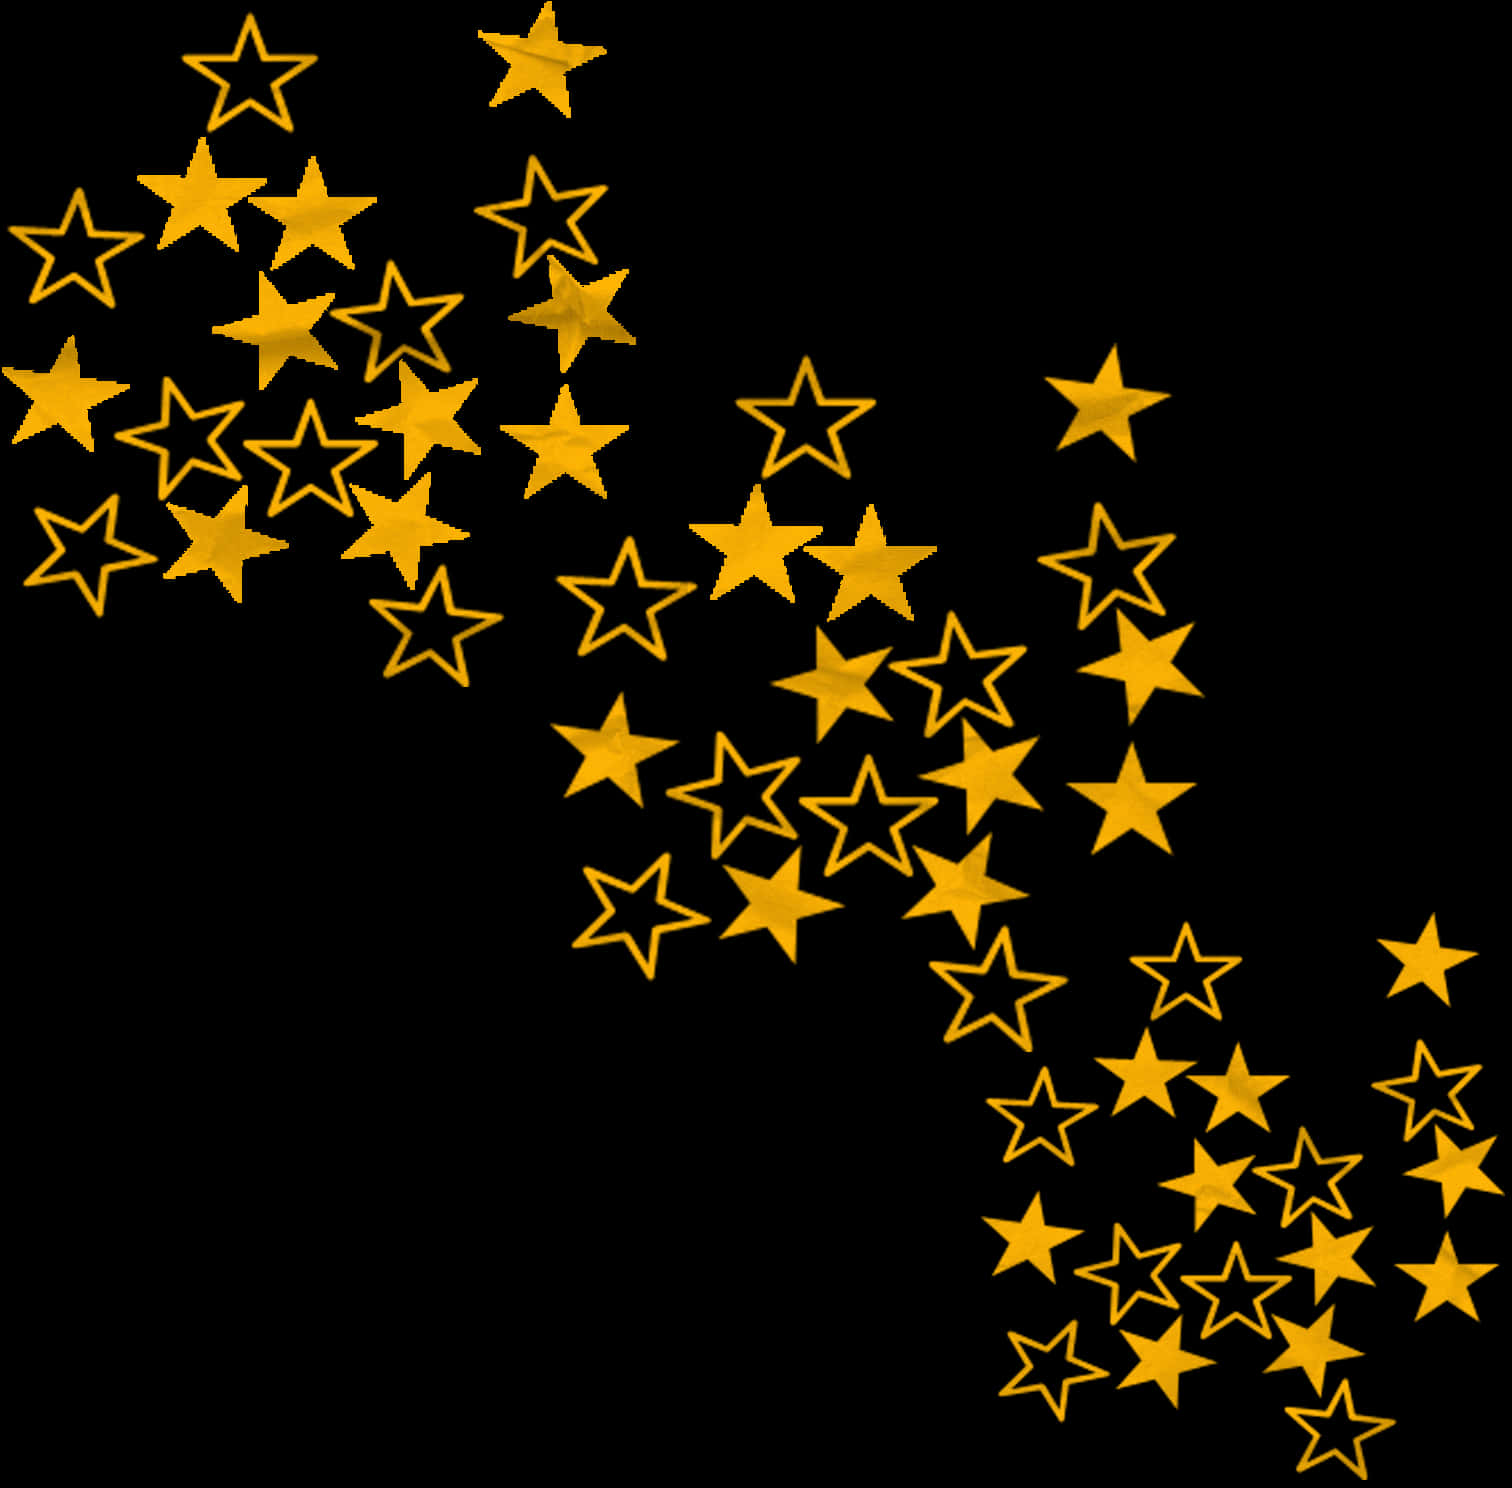 Golden Star Patternon Black Background